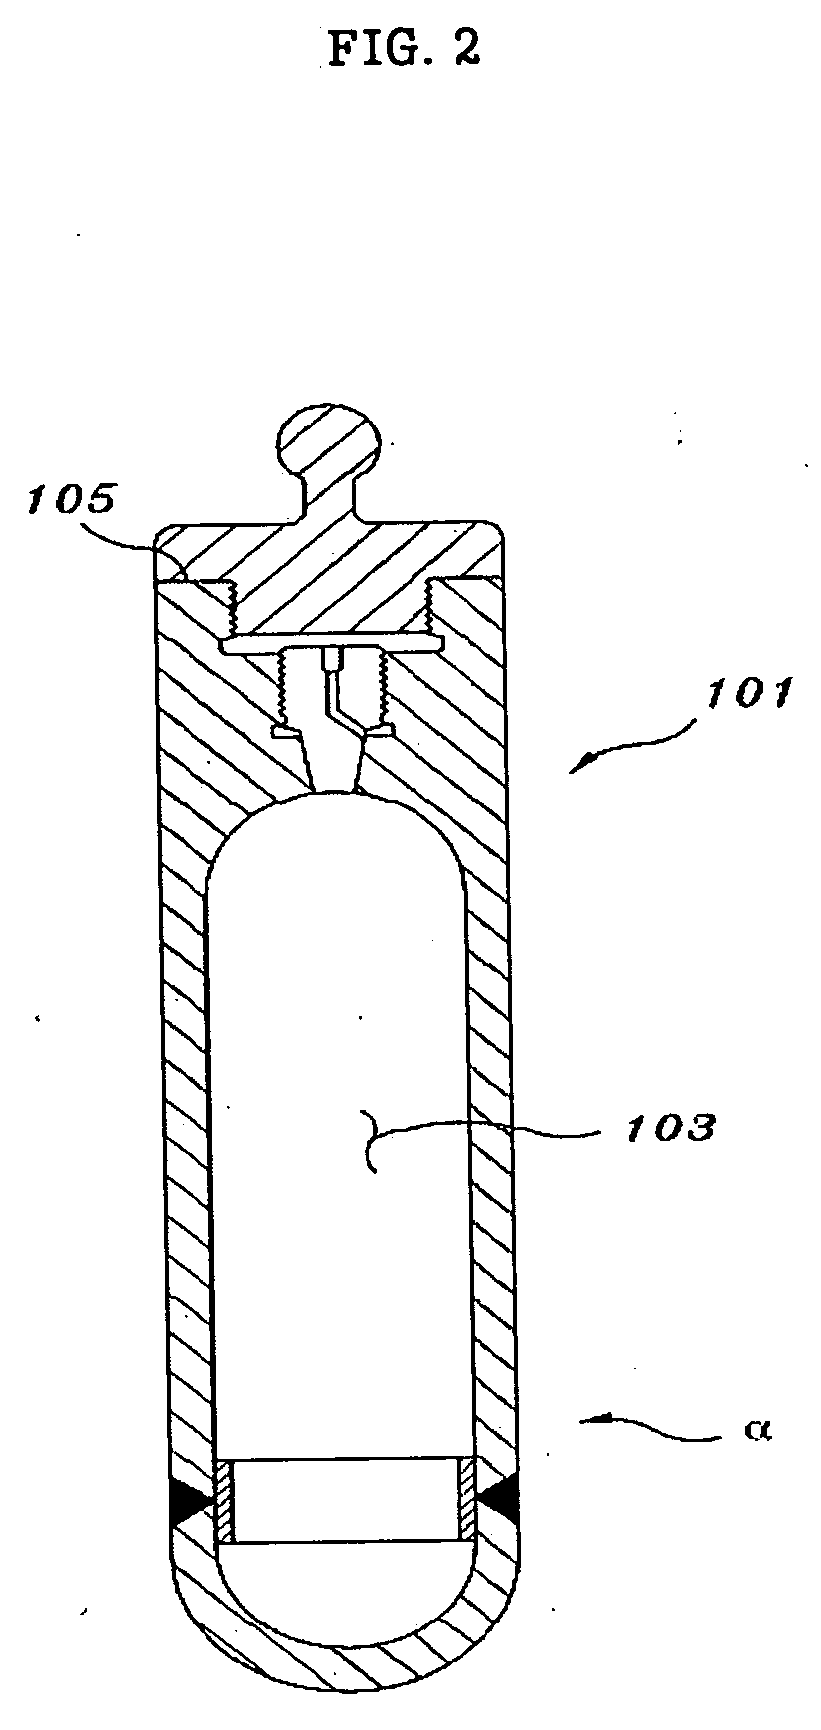 Internal circulating irradiation capsule for iodine-125 and method of producing iodine-125 using same